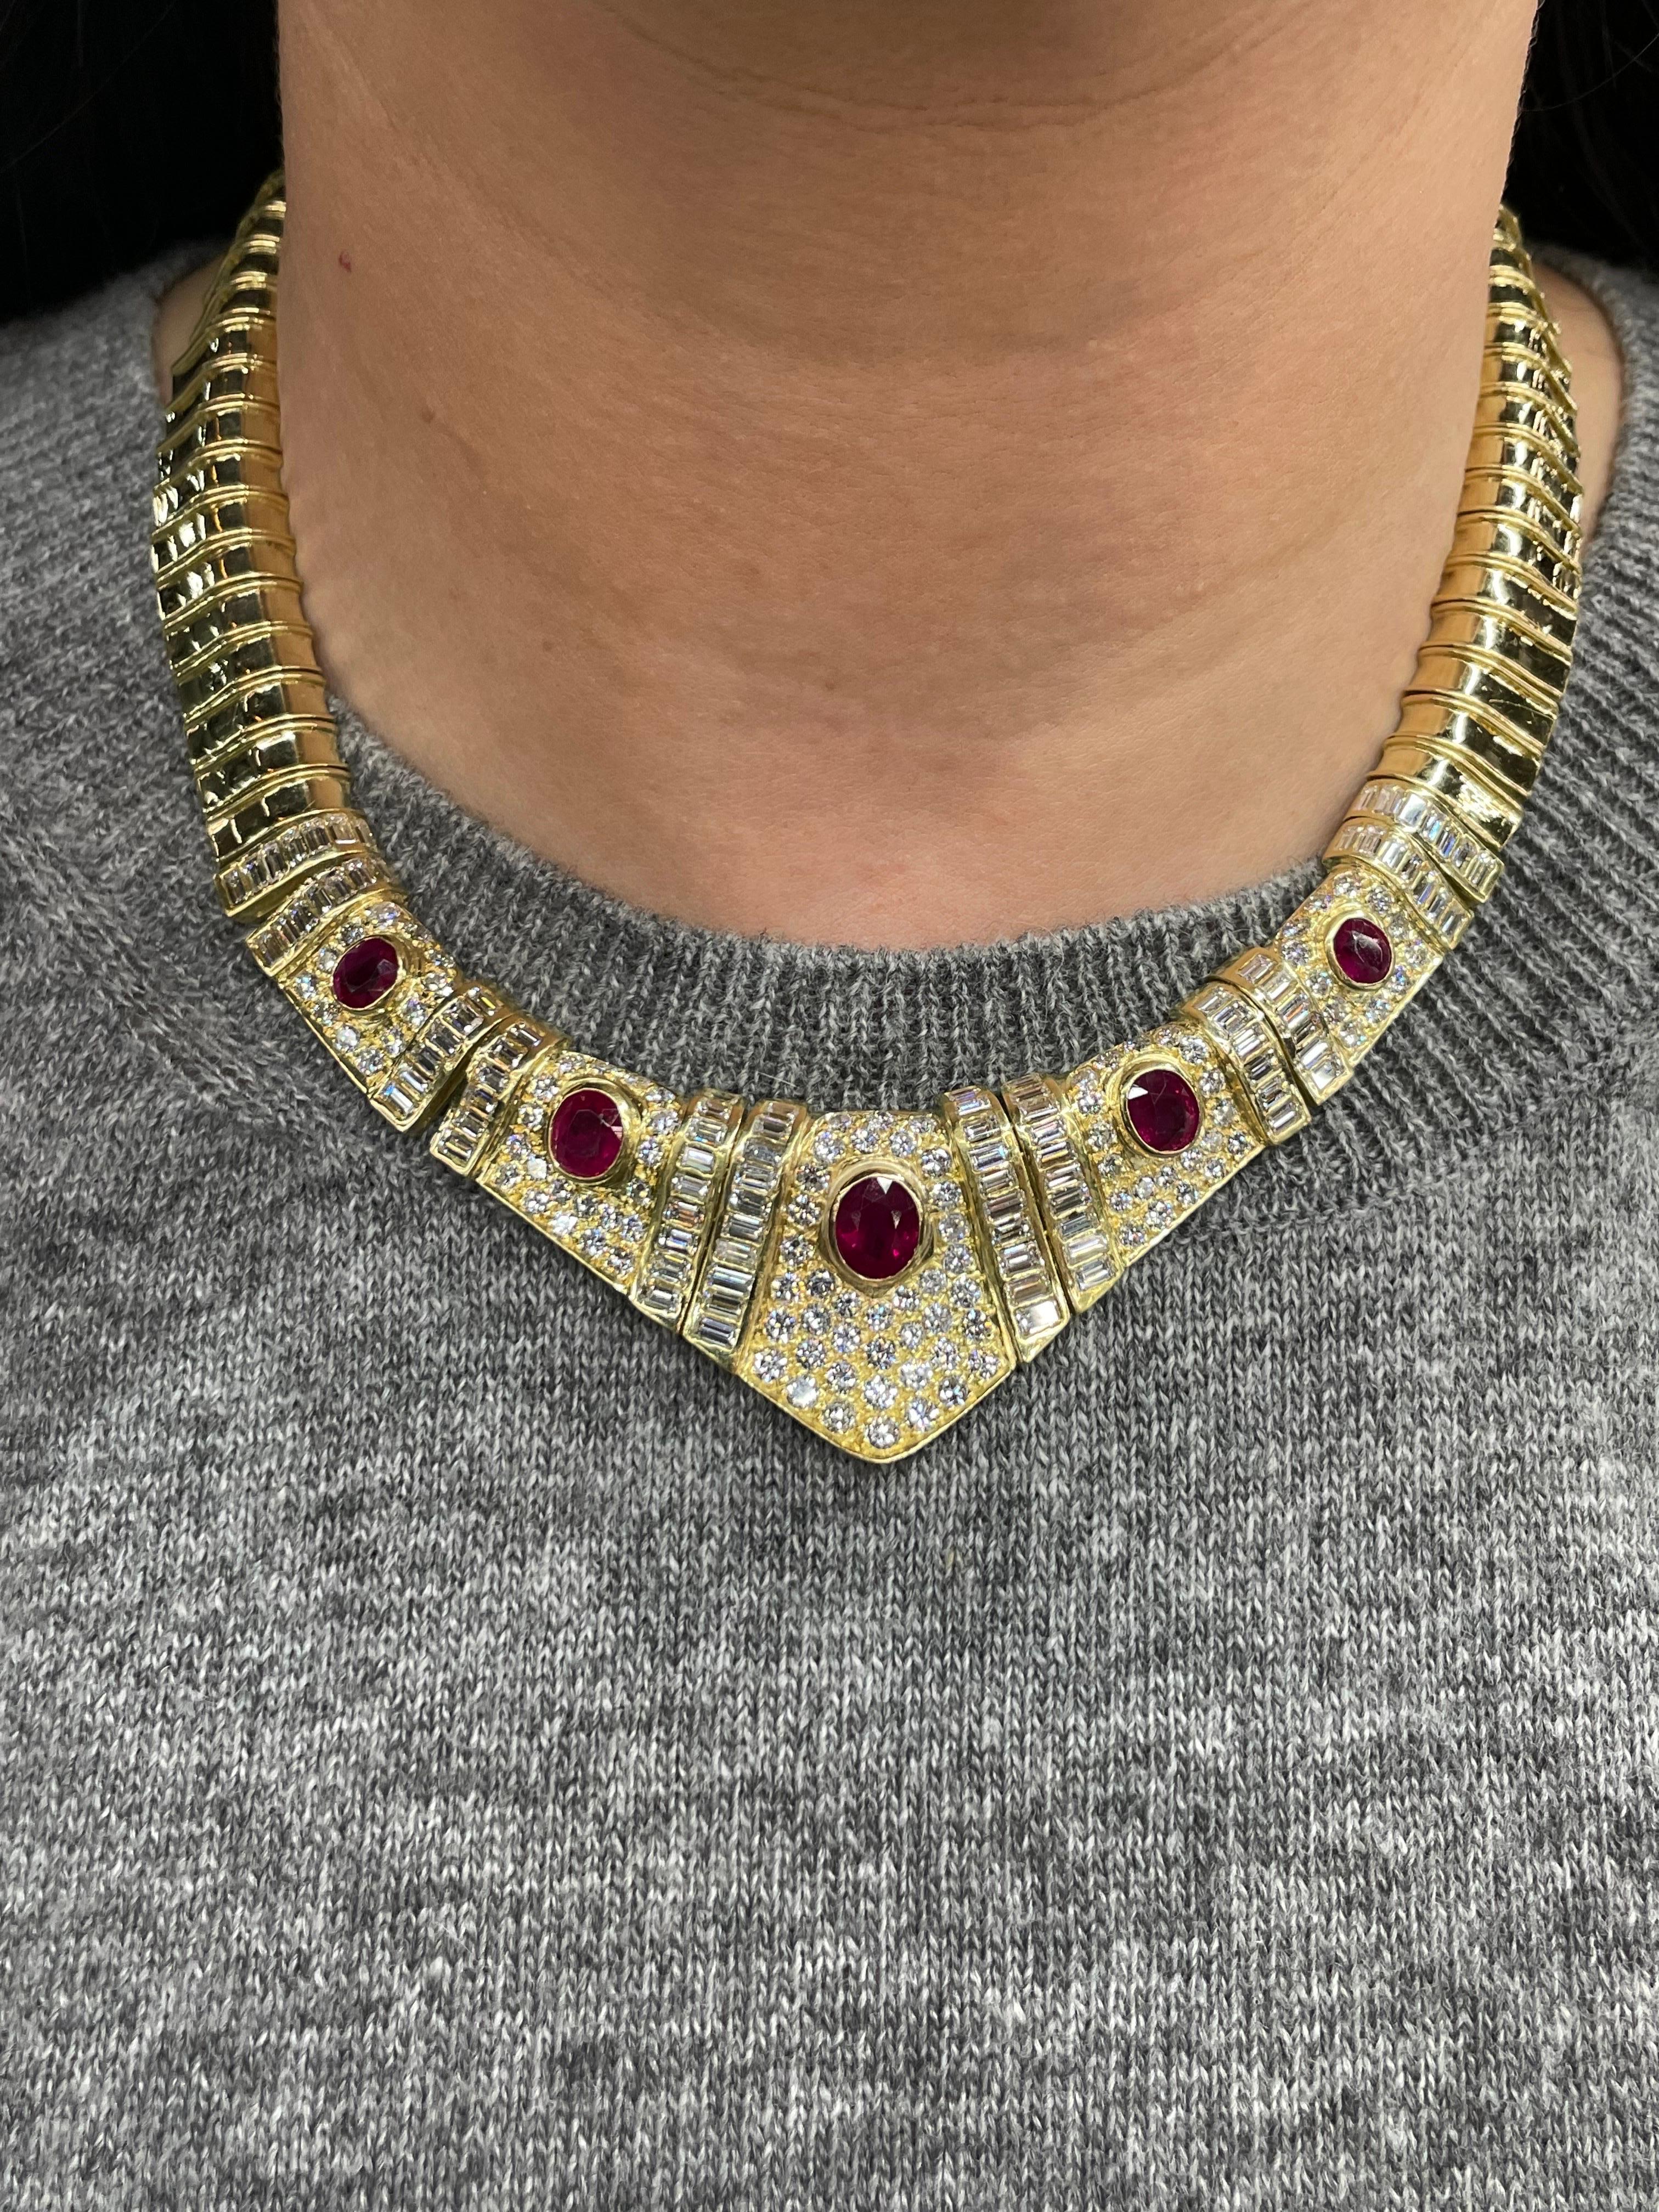 Certified Burma Ruby Diamond Collar Necklace 24.50 Carats 18 Karat Yellow Gold For Sale 8